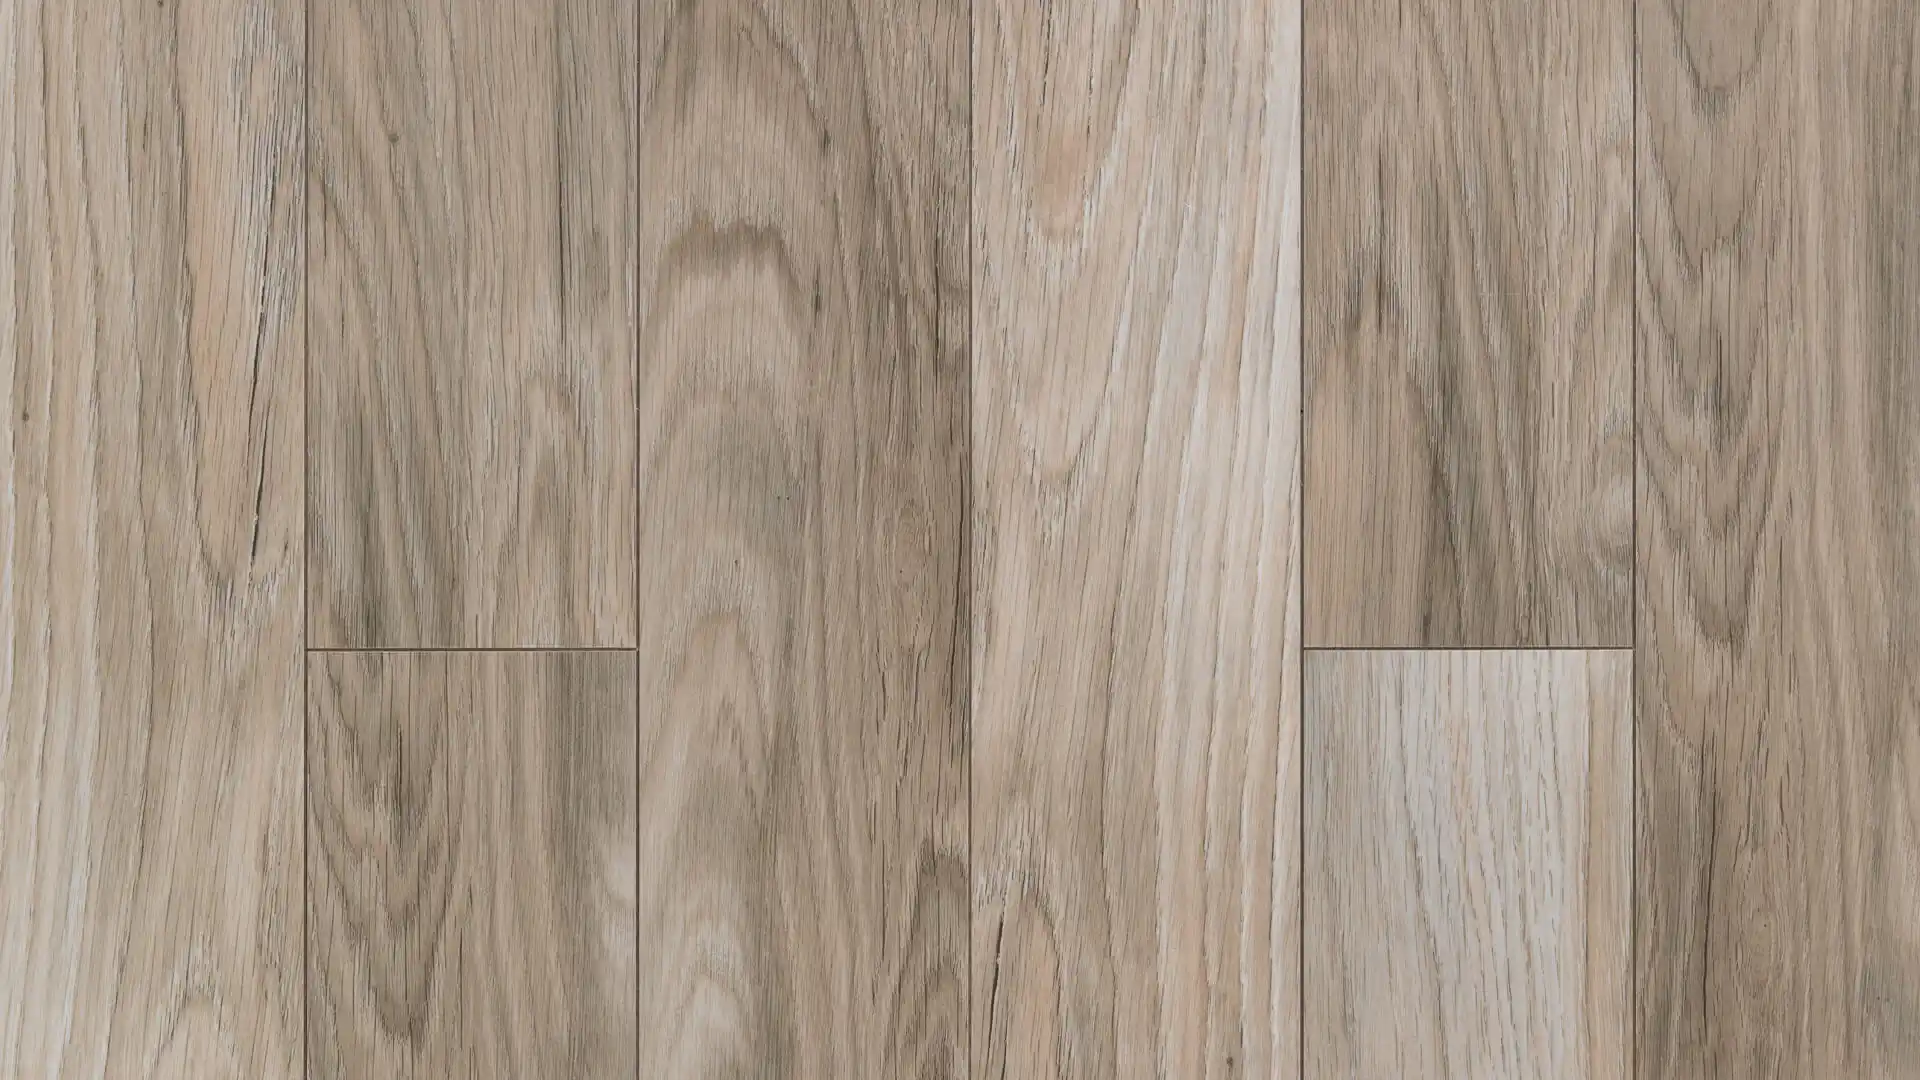 Best Wood Flooring Company Wood Floor Installer Las Vegas Flooring Service  Laminate Floor Installation – Service Las Vegas 702-530-2946